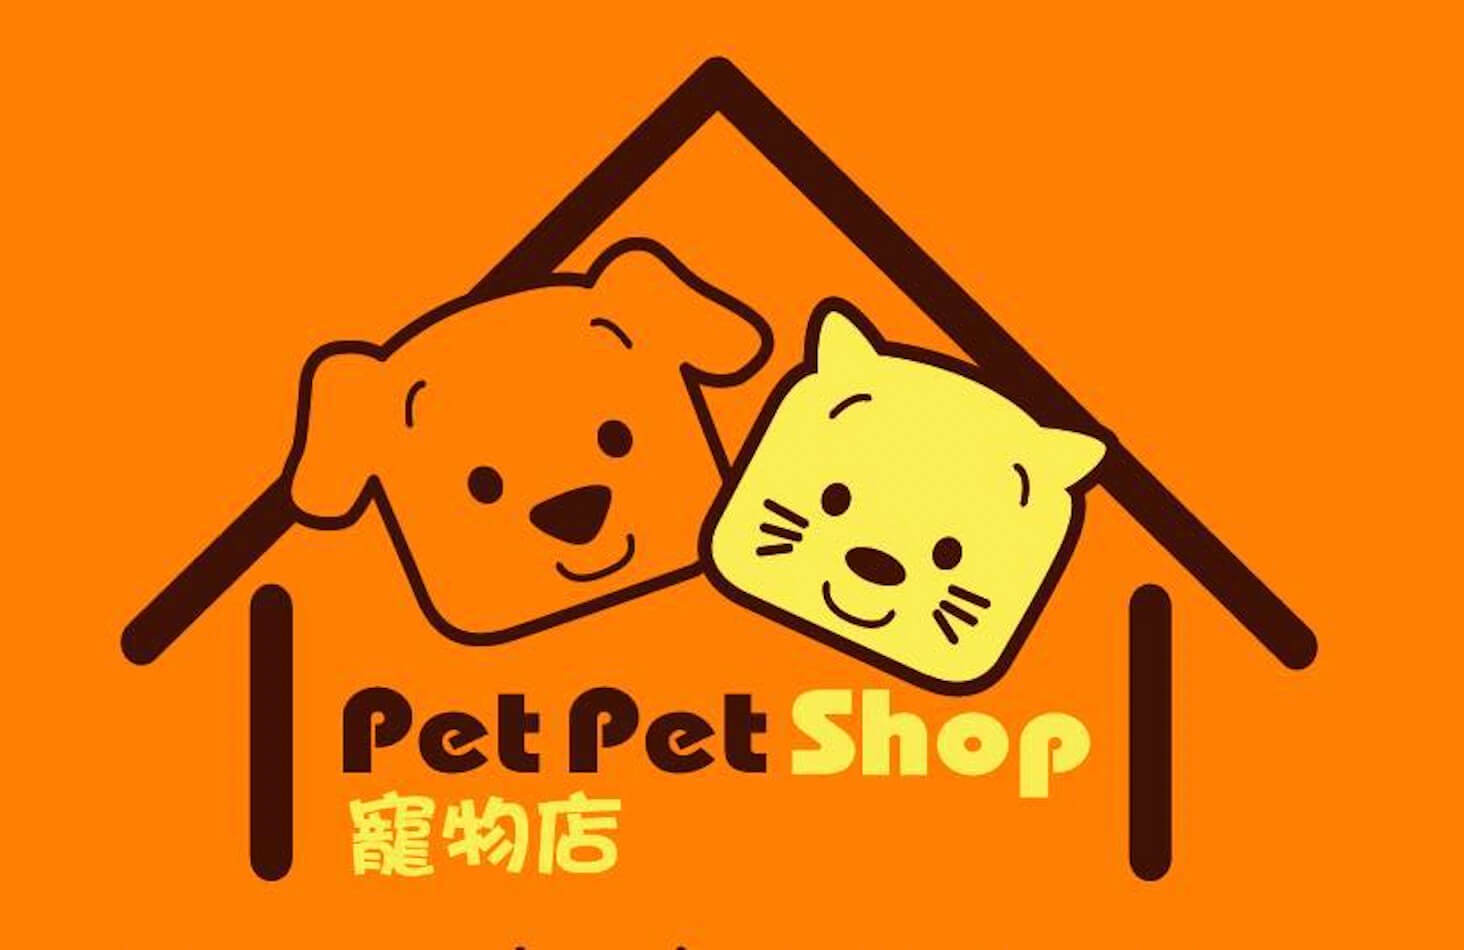 Pet Pet Shop的特許經營香港區加盟店項目1